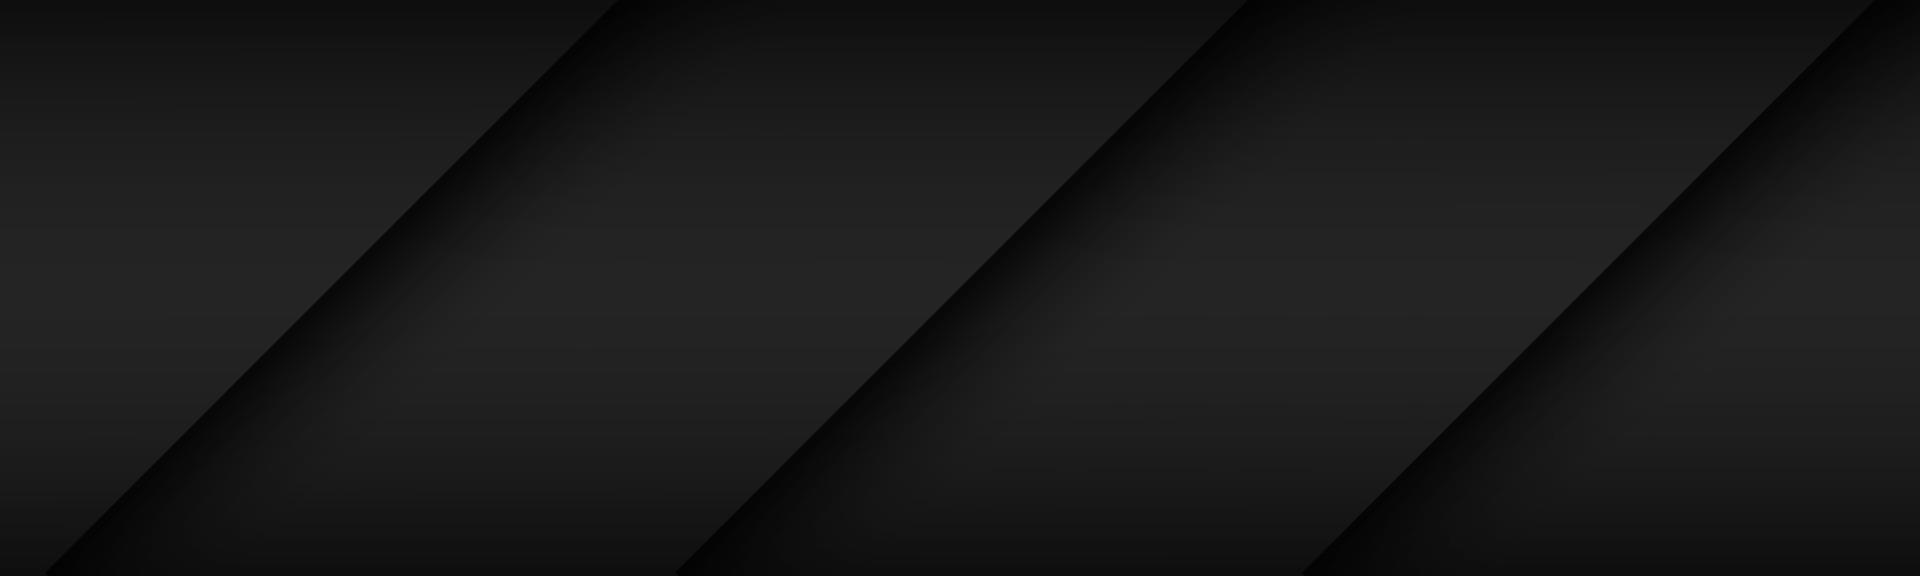 Encabezado de material moderno negro con capas superpuestas con colores CMYK. banner para su negocio. vector de fondo de pantalla panorámica abstracta